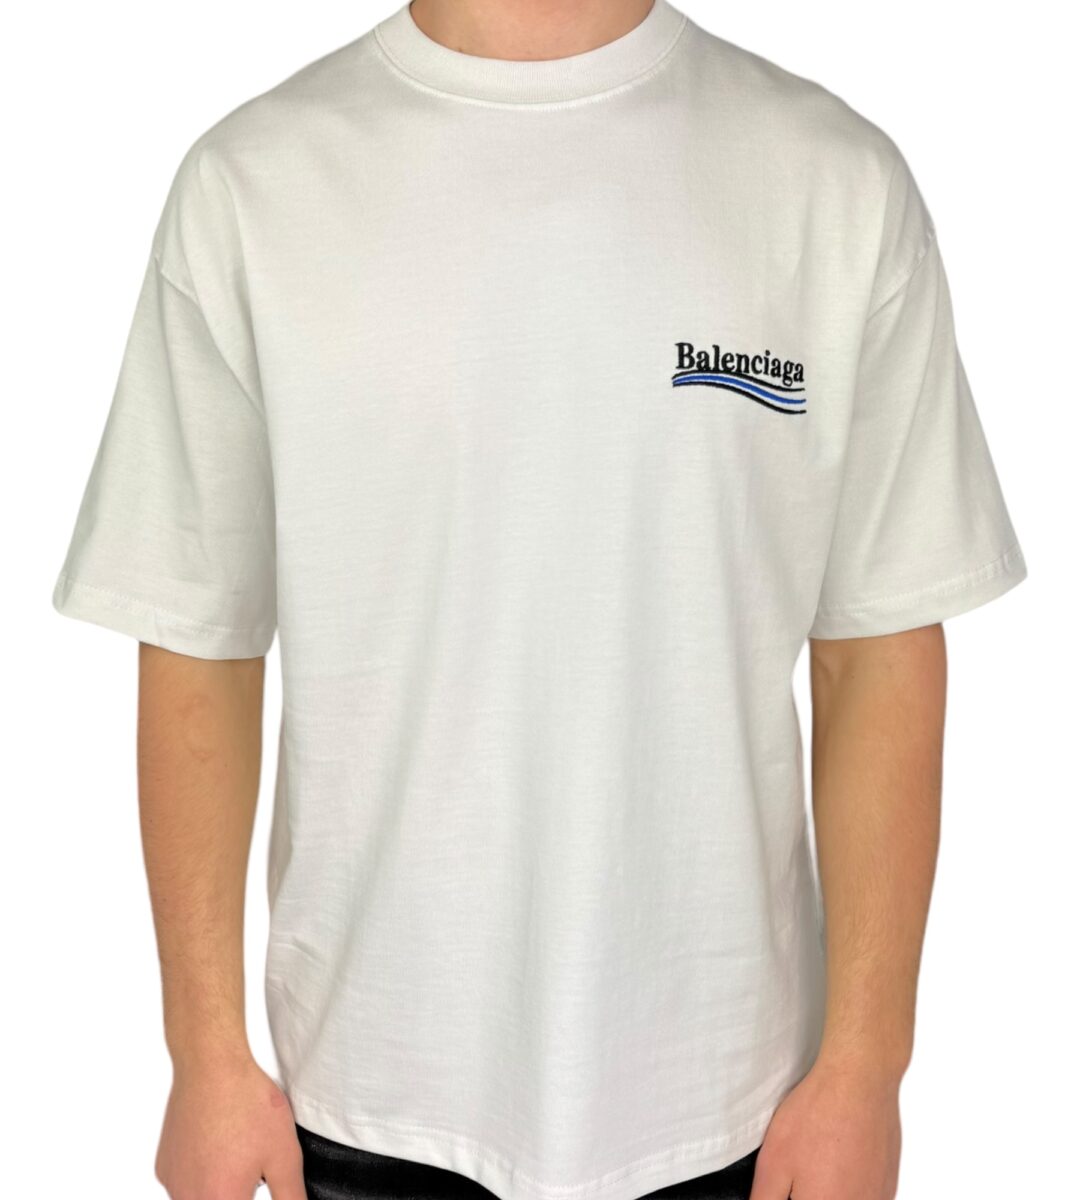 Balenciaga Pilot T-Shirt White